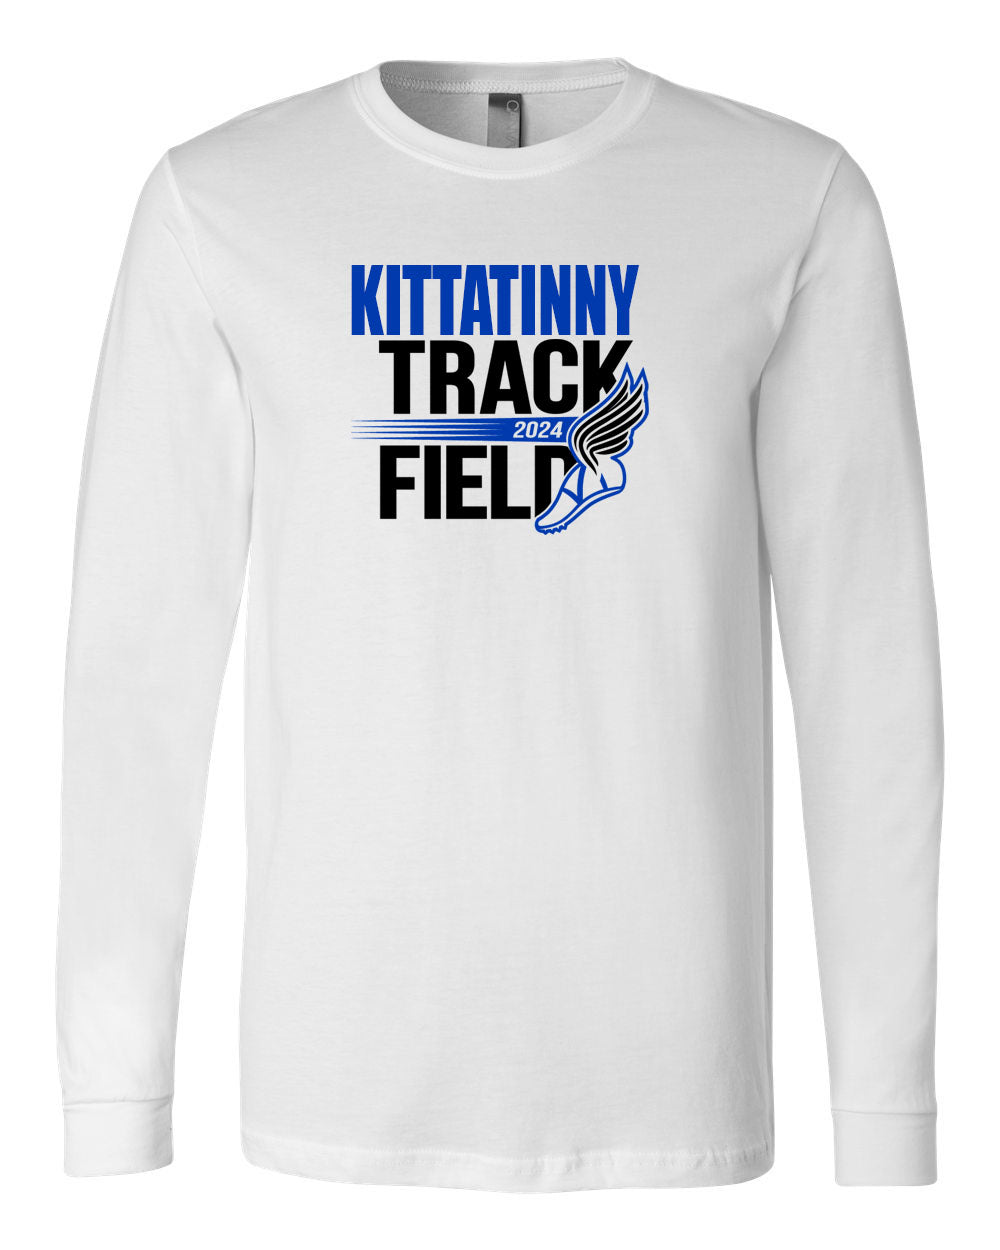 Kittatinny Track Design 6 Long Sleeve Shirt